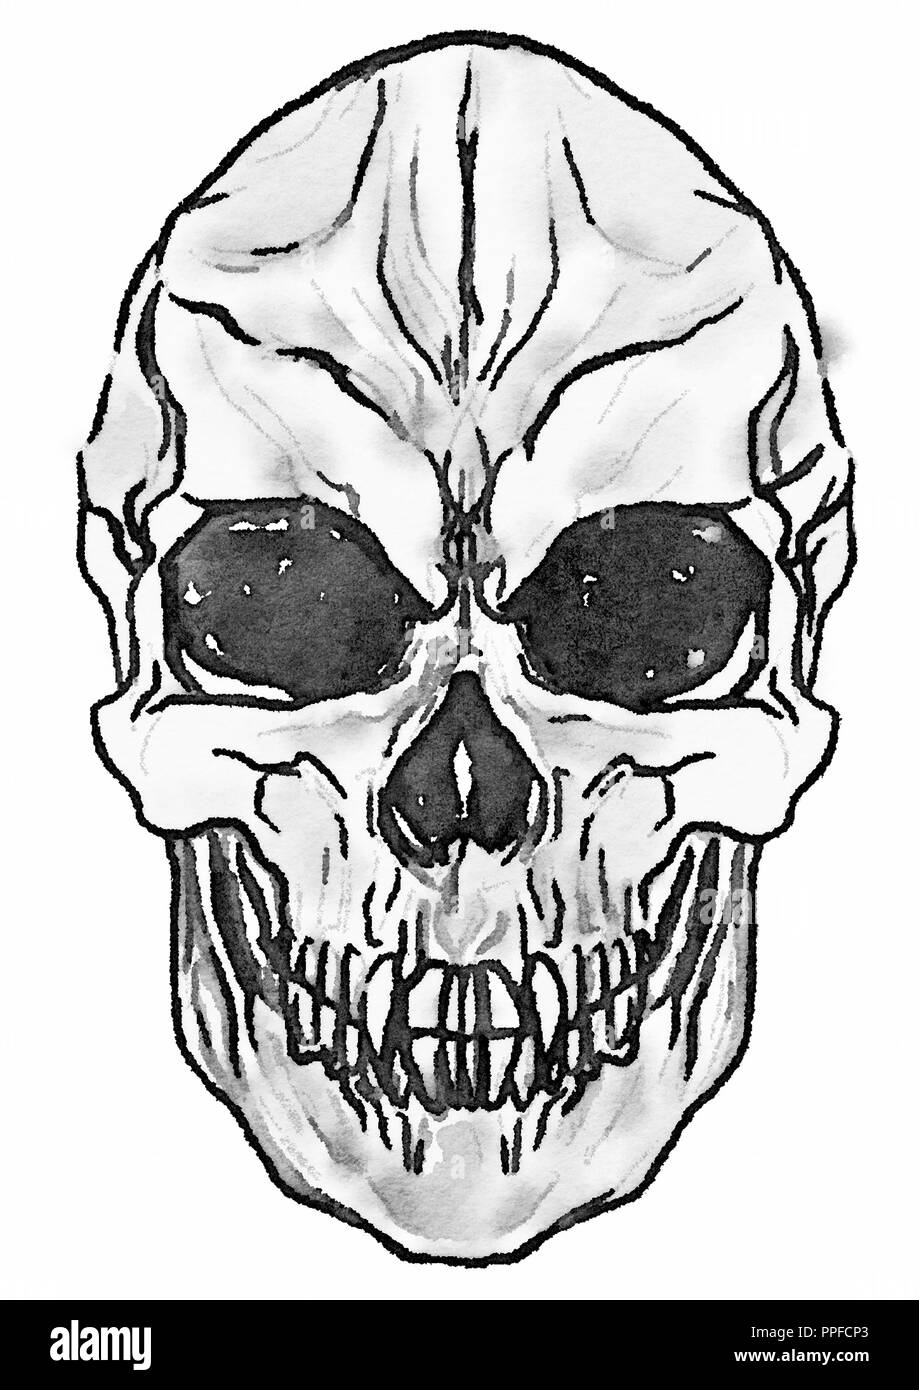 Vampire skull illustration Stock Photo - Alamy